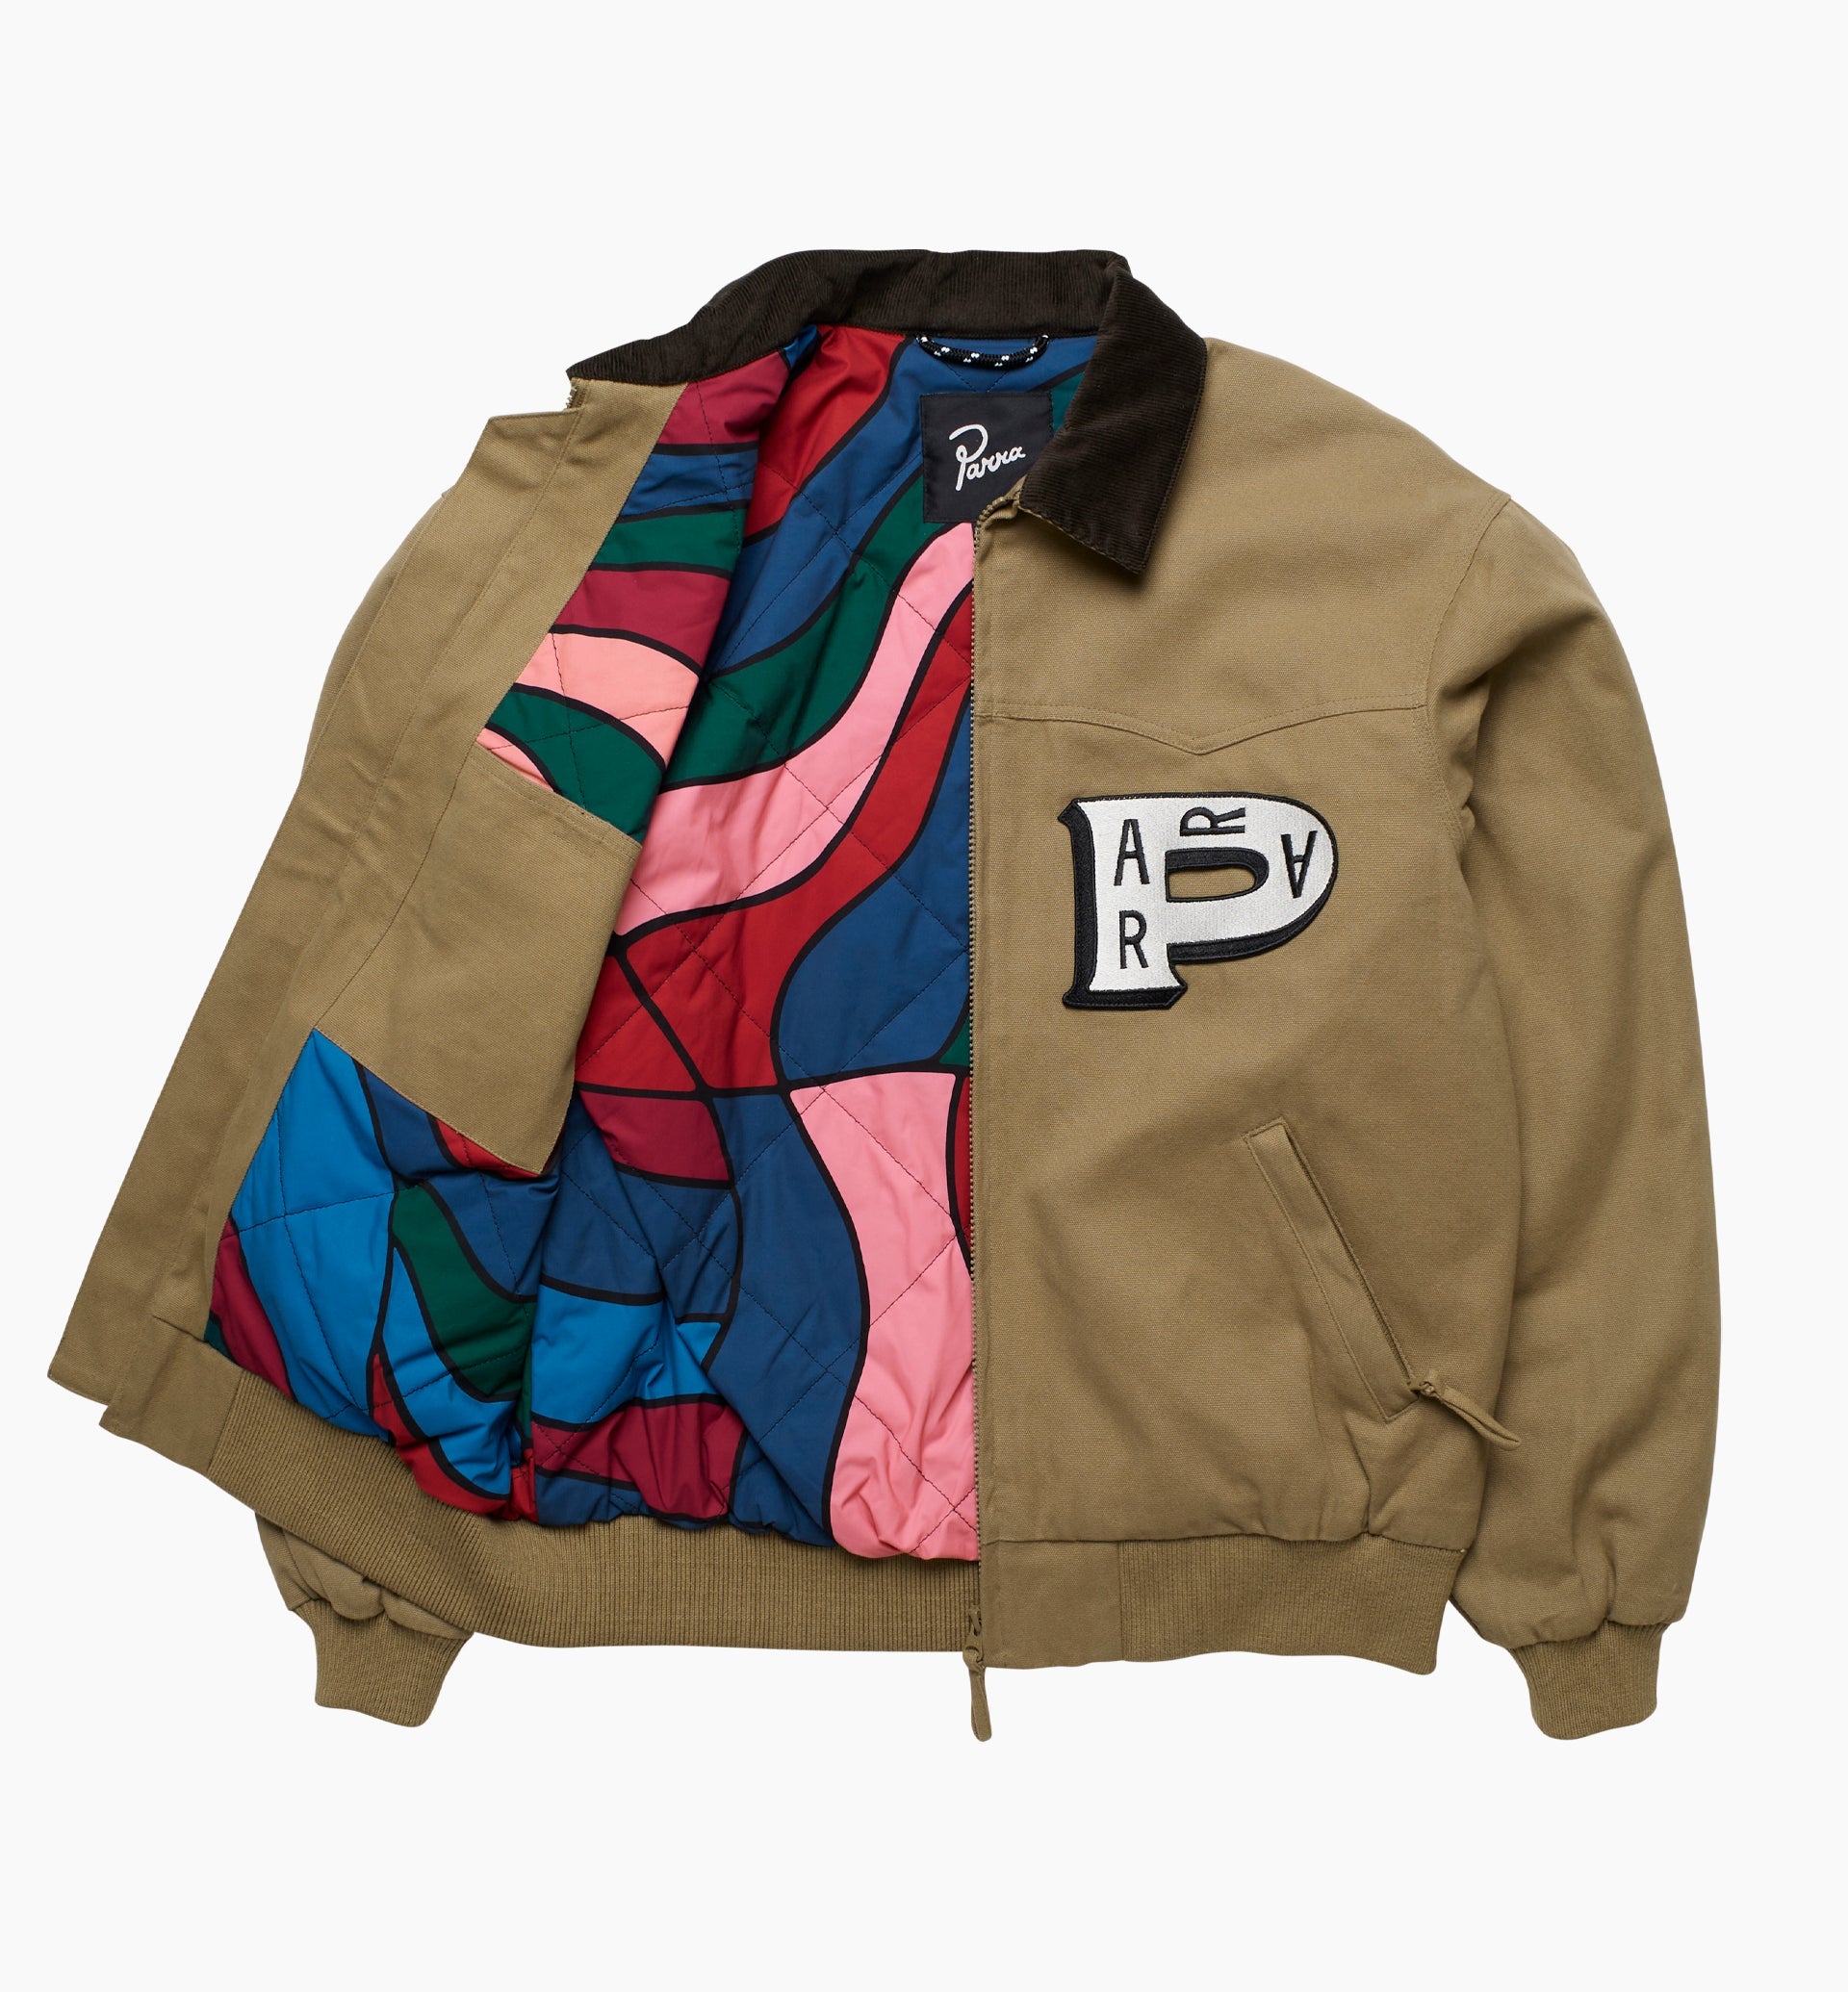 Parra - worked P jacket